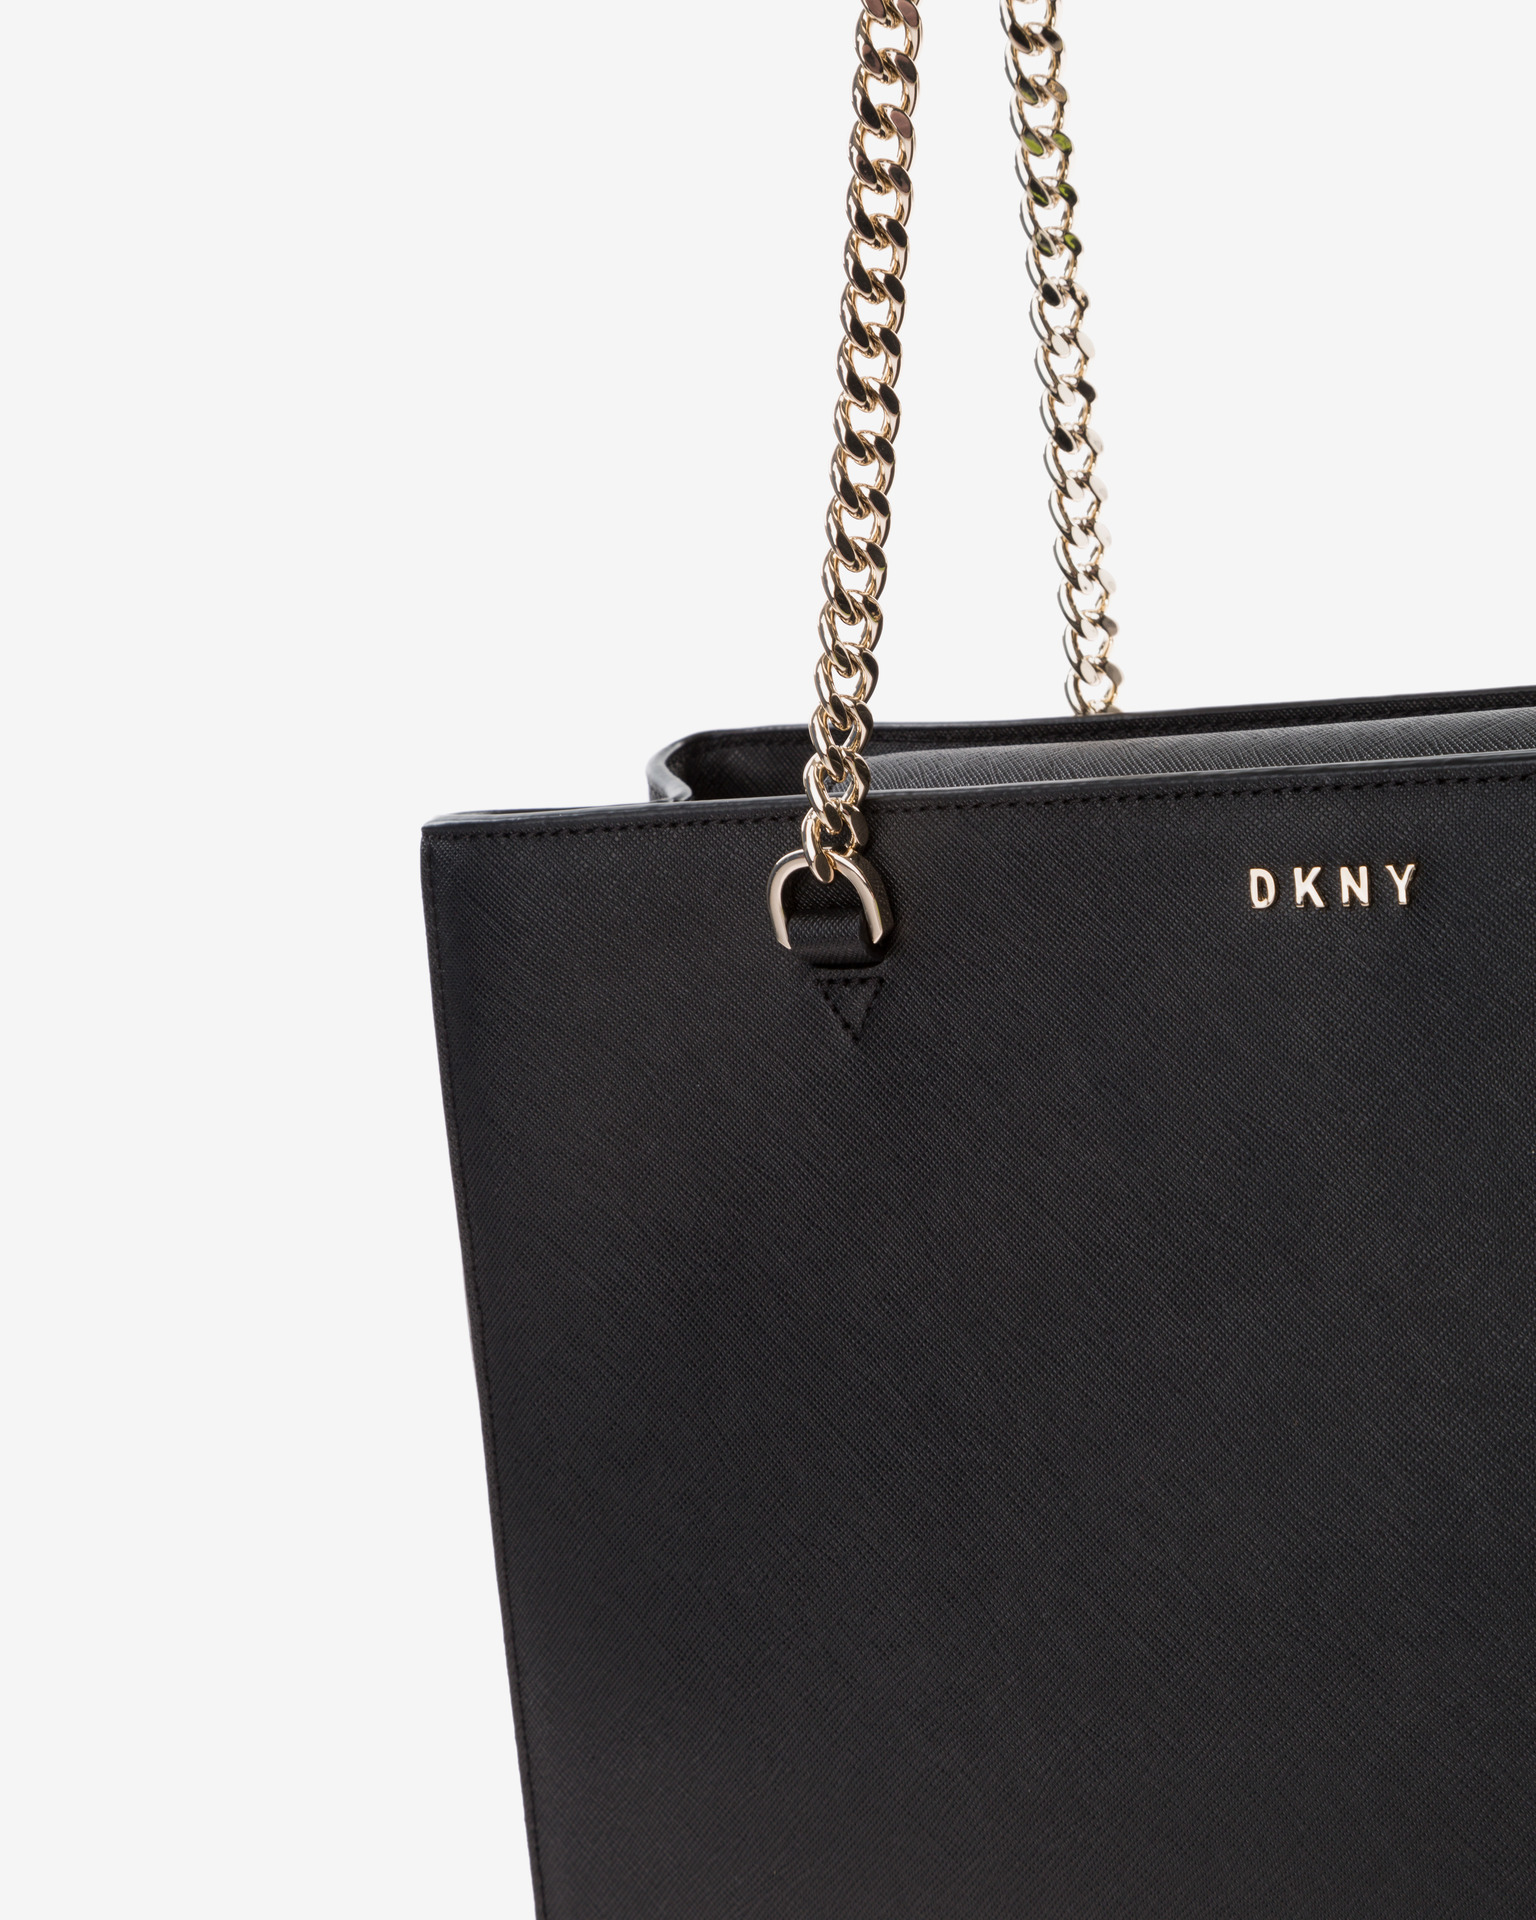 DKNY Bryant Park Shopper Bag in Black